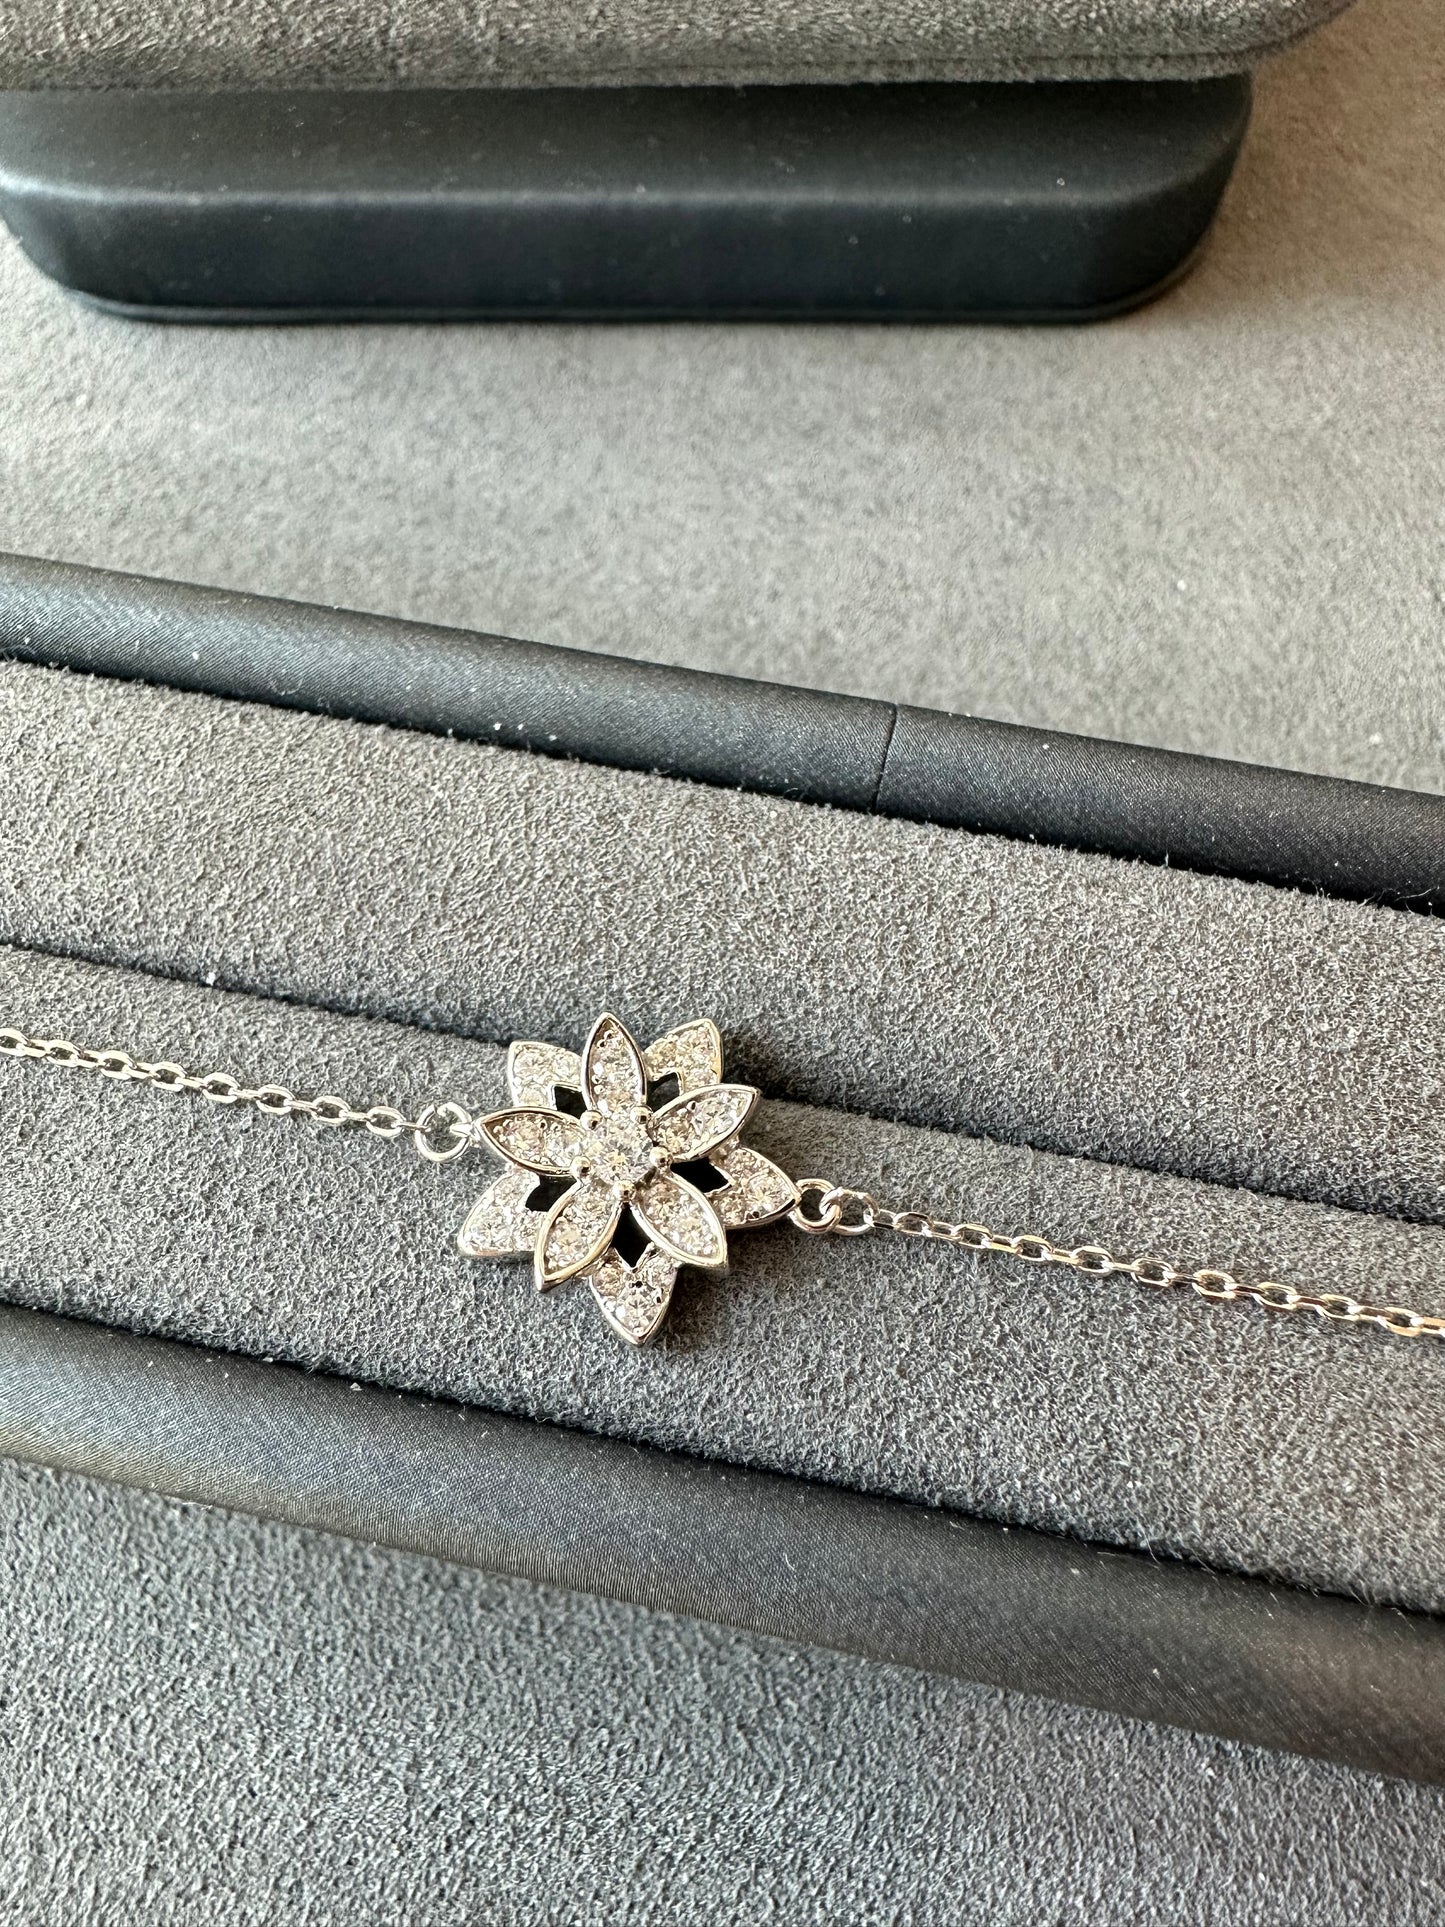 CZ Lotus earrings necklace bracelet 925 silver 18k white gold plated - ParadiseKissCo